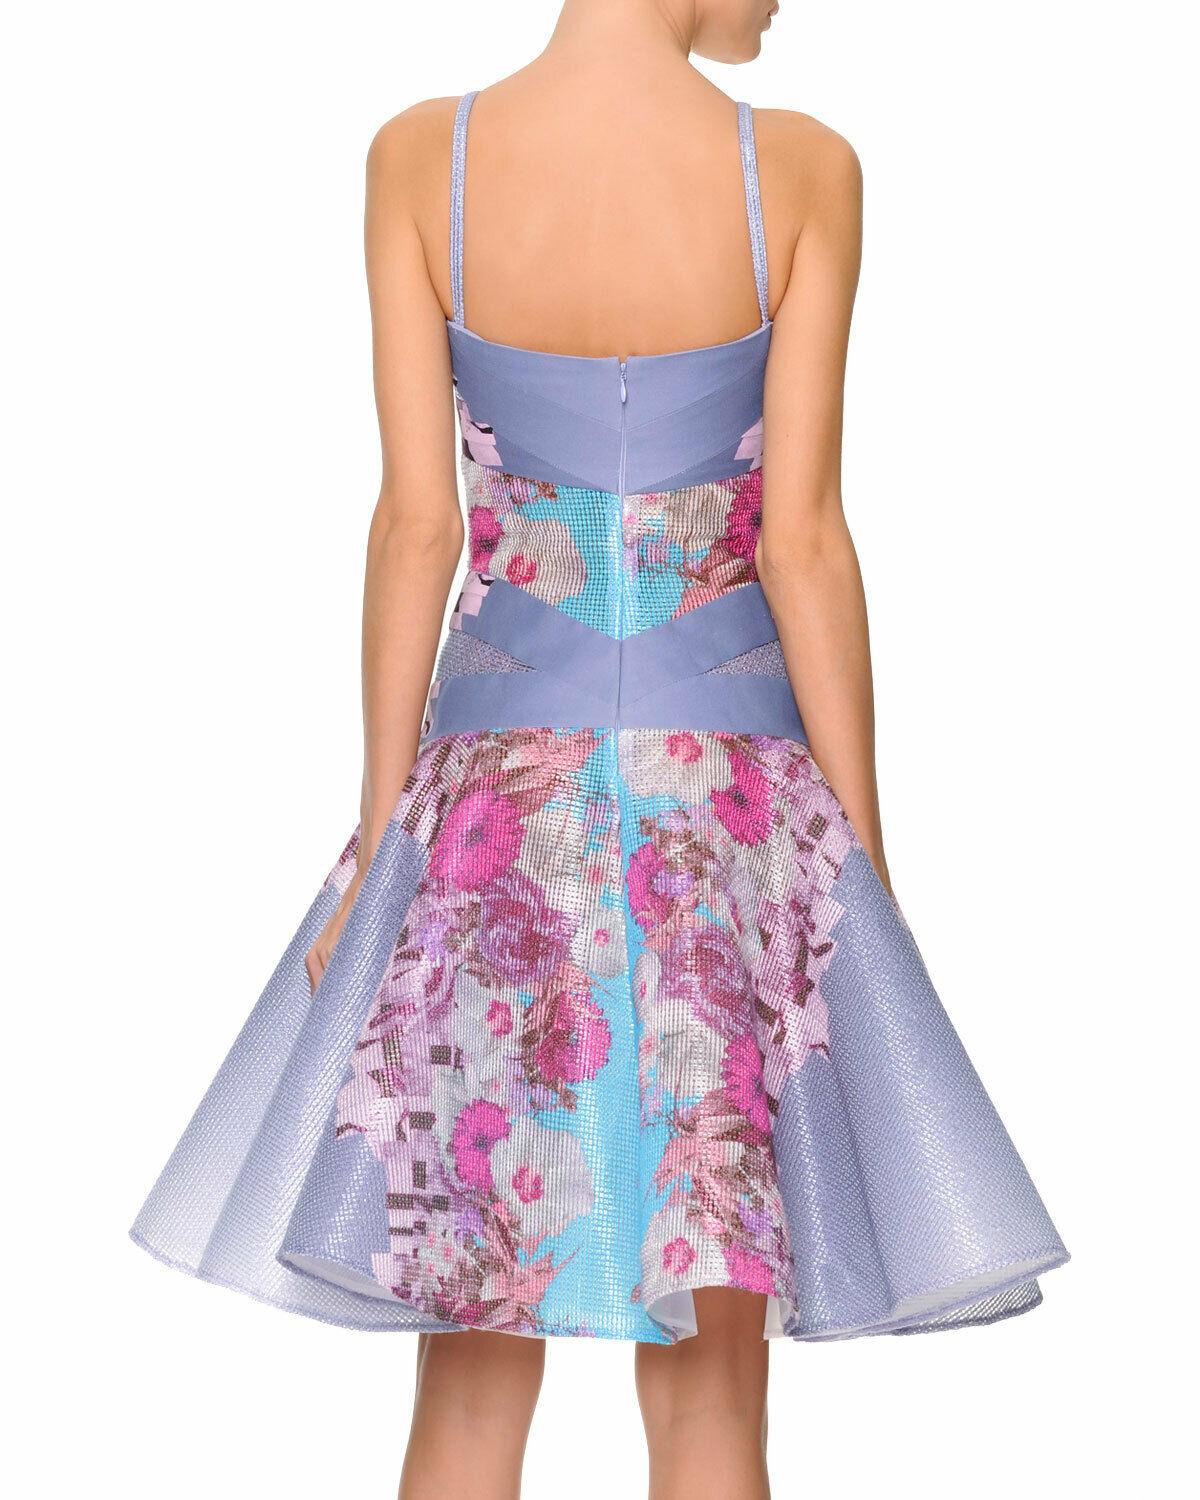 Women's S/S2014 L#20 Versace Lilac Floral Raffia Corset Dress with Flounce Skirt 40 -4/6